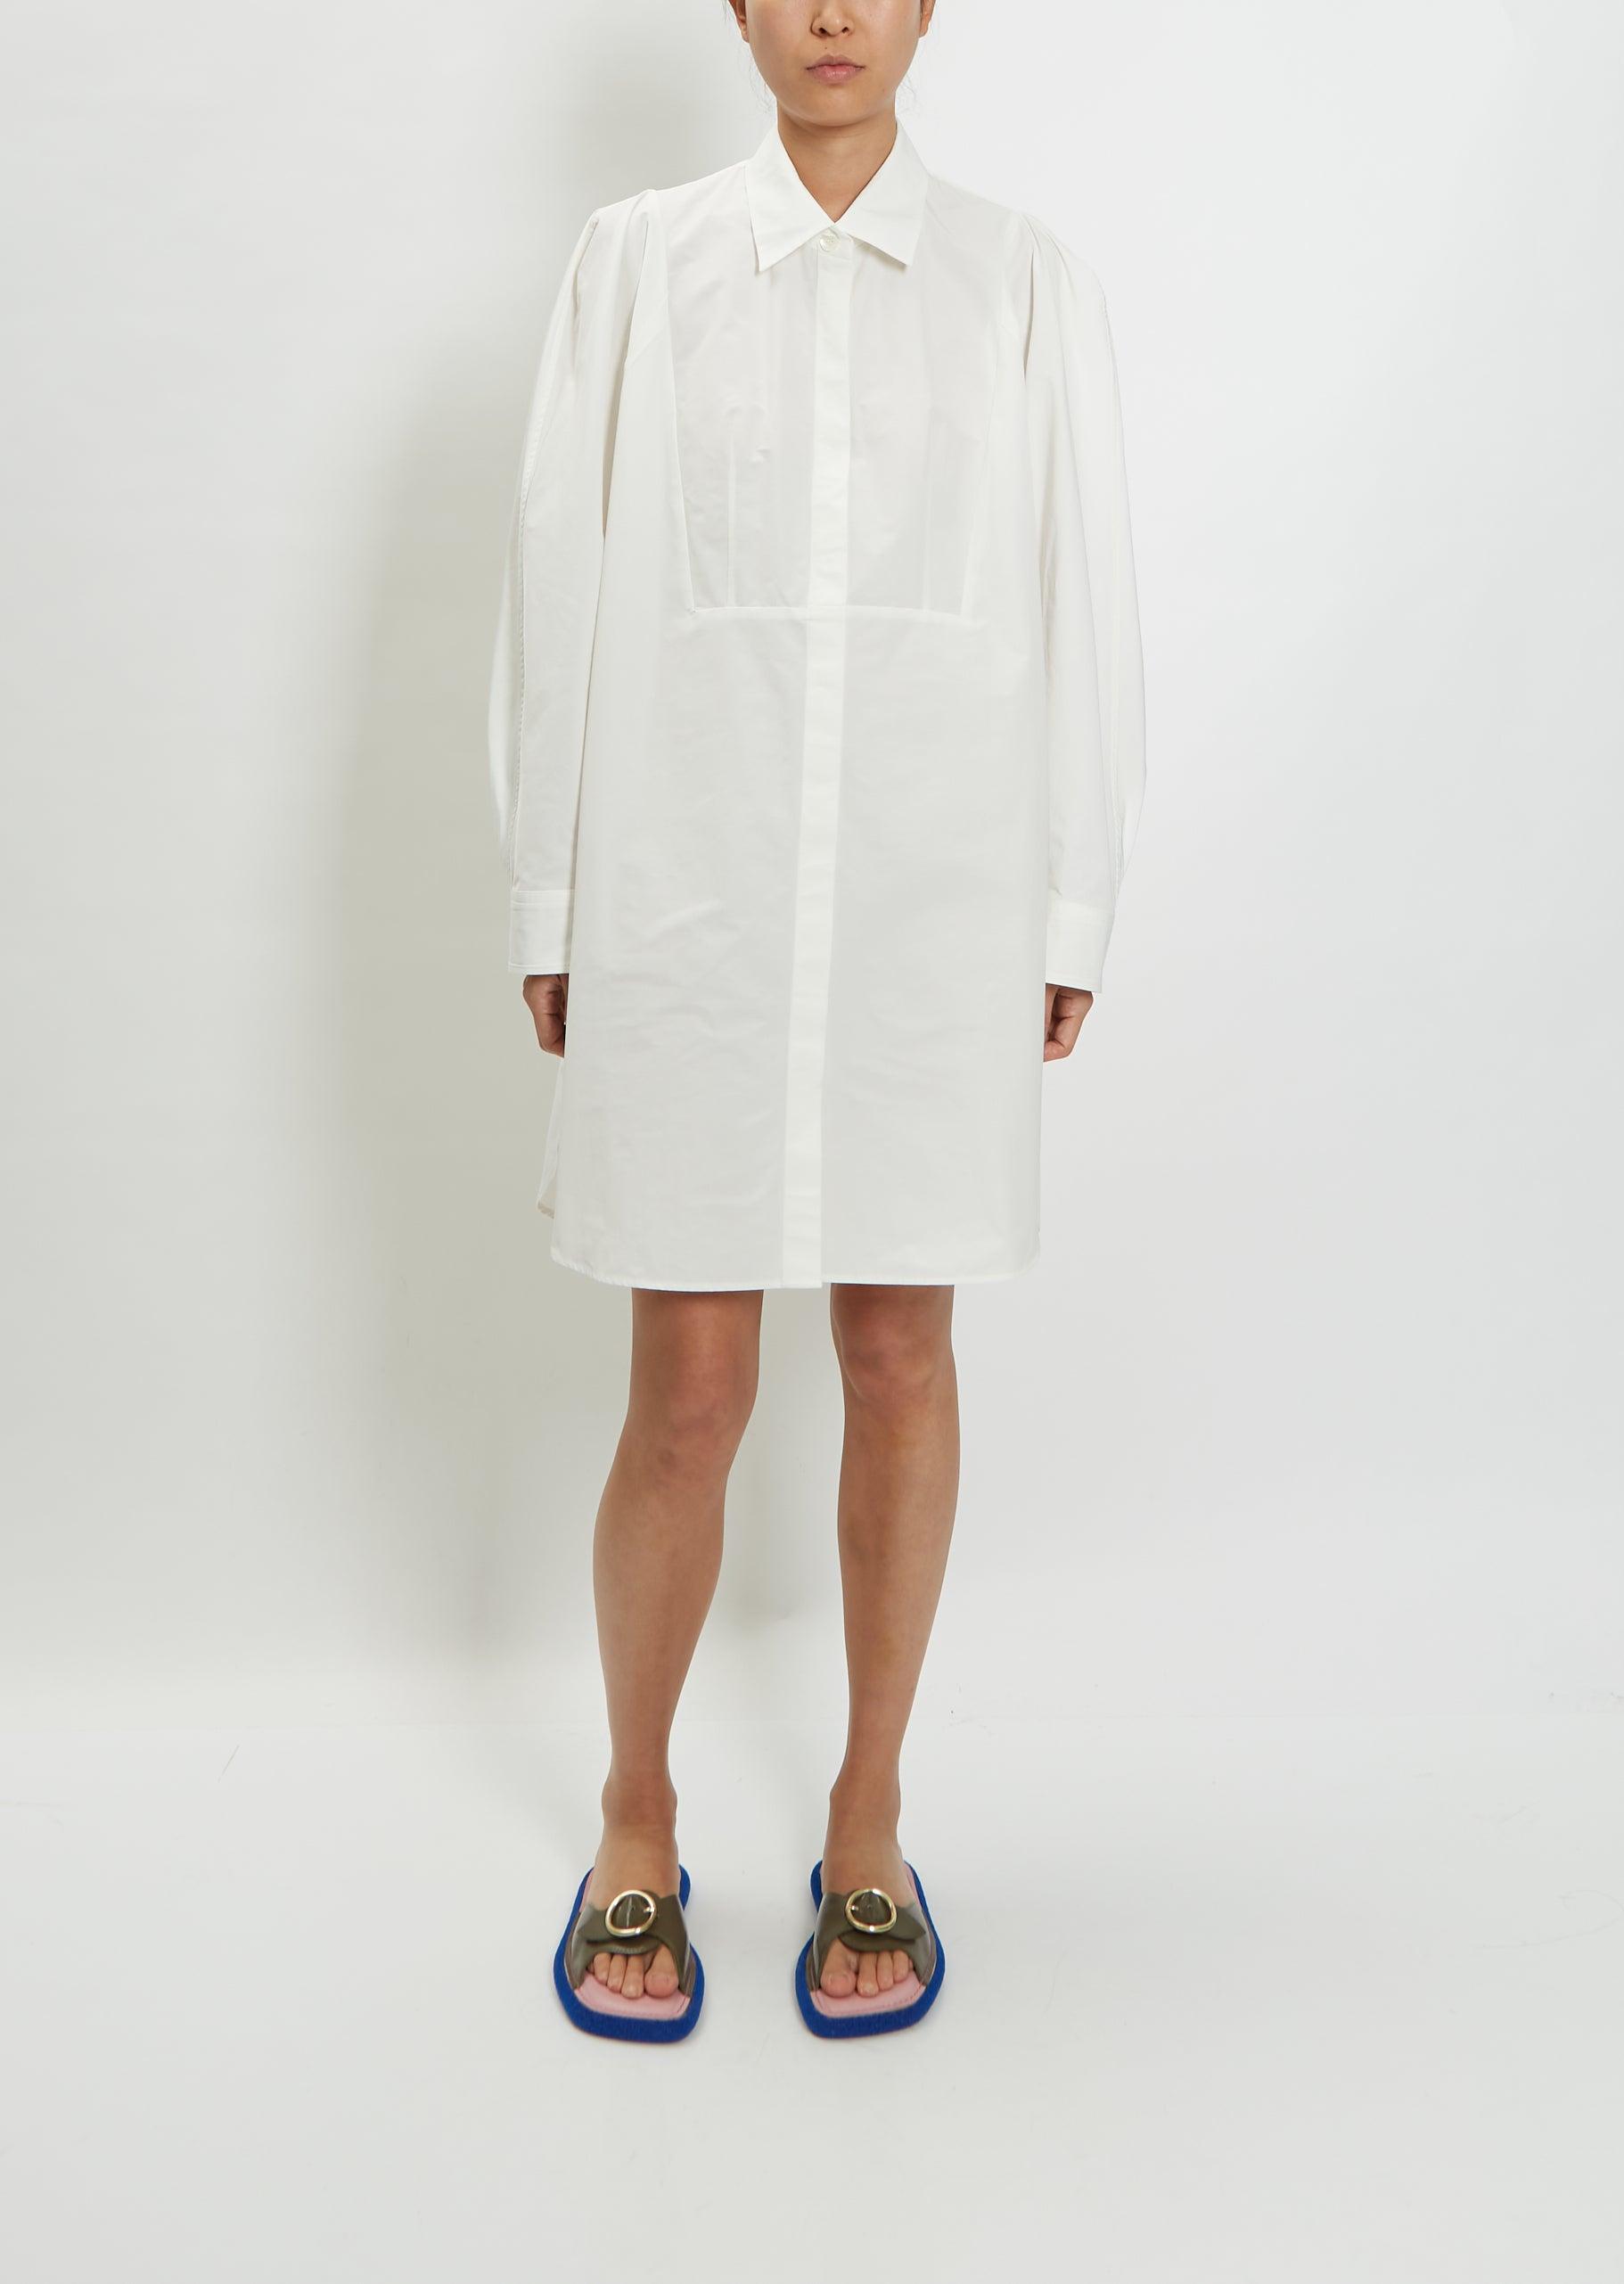 Dries Van Noten Dali Shirt Dress in White | Lyst